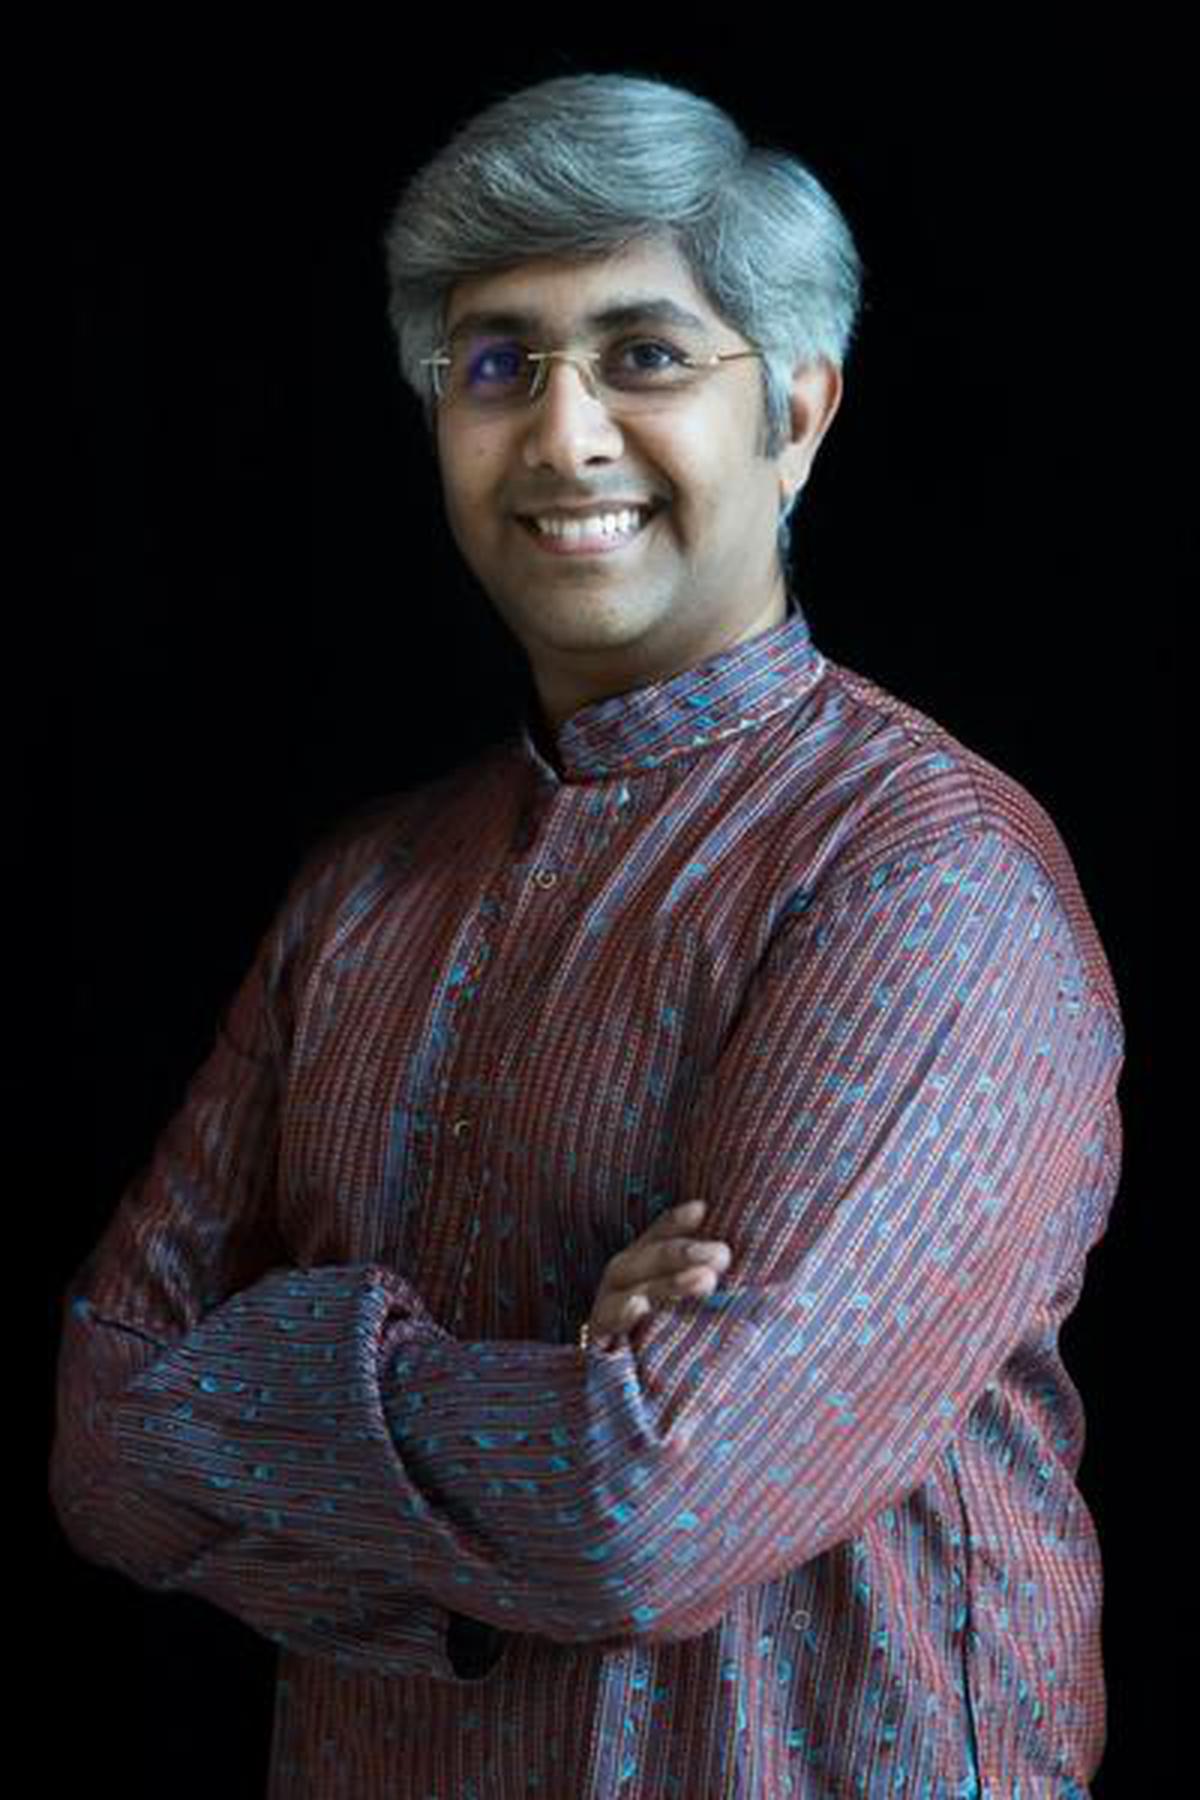 Sound recordist Sai Shravanam